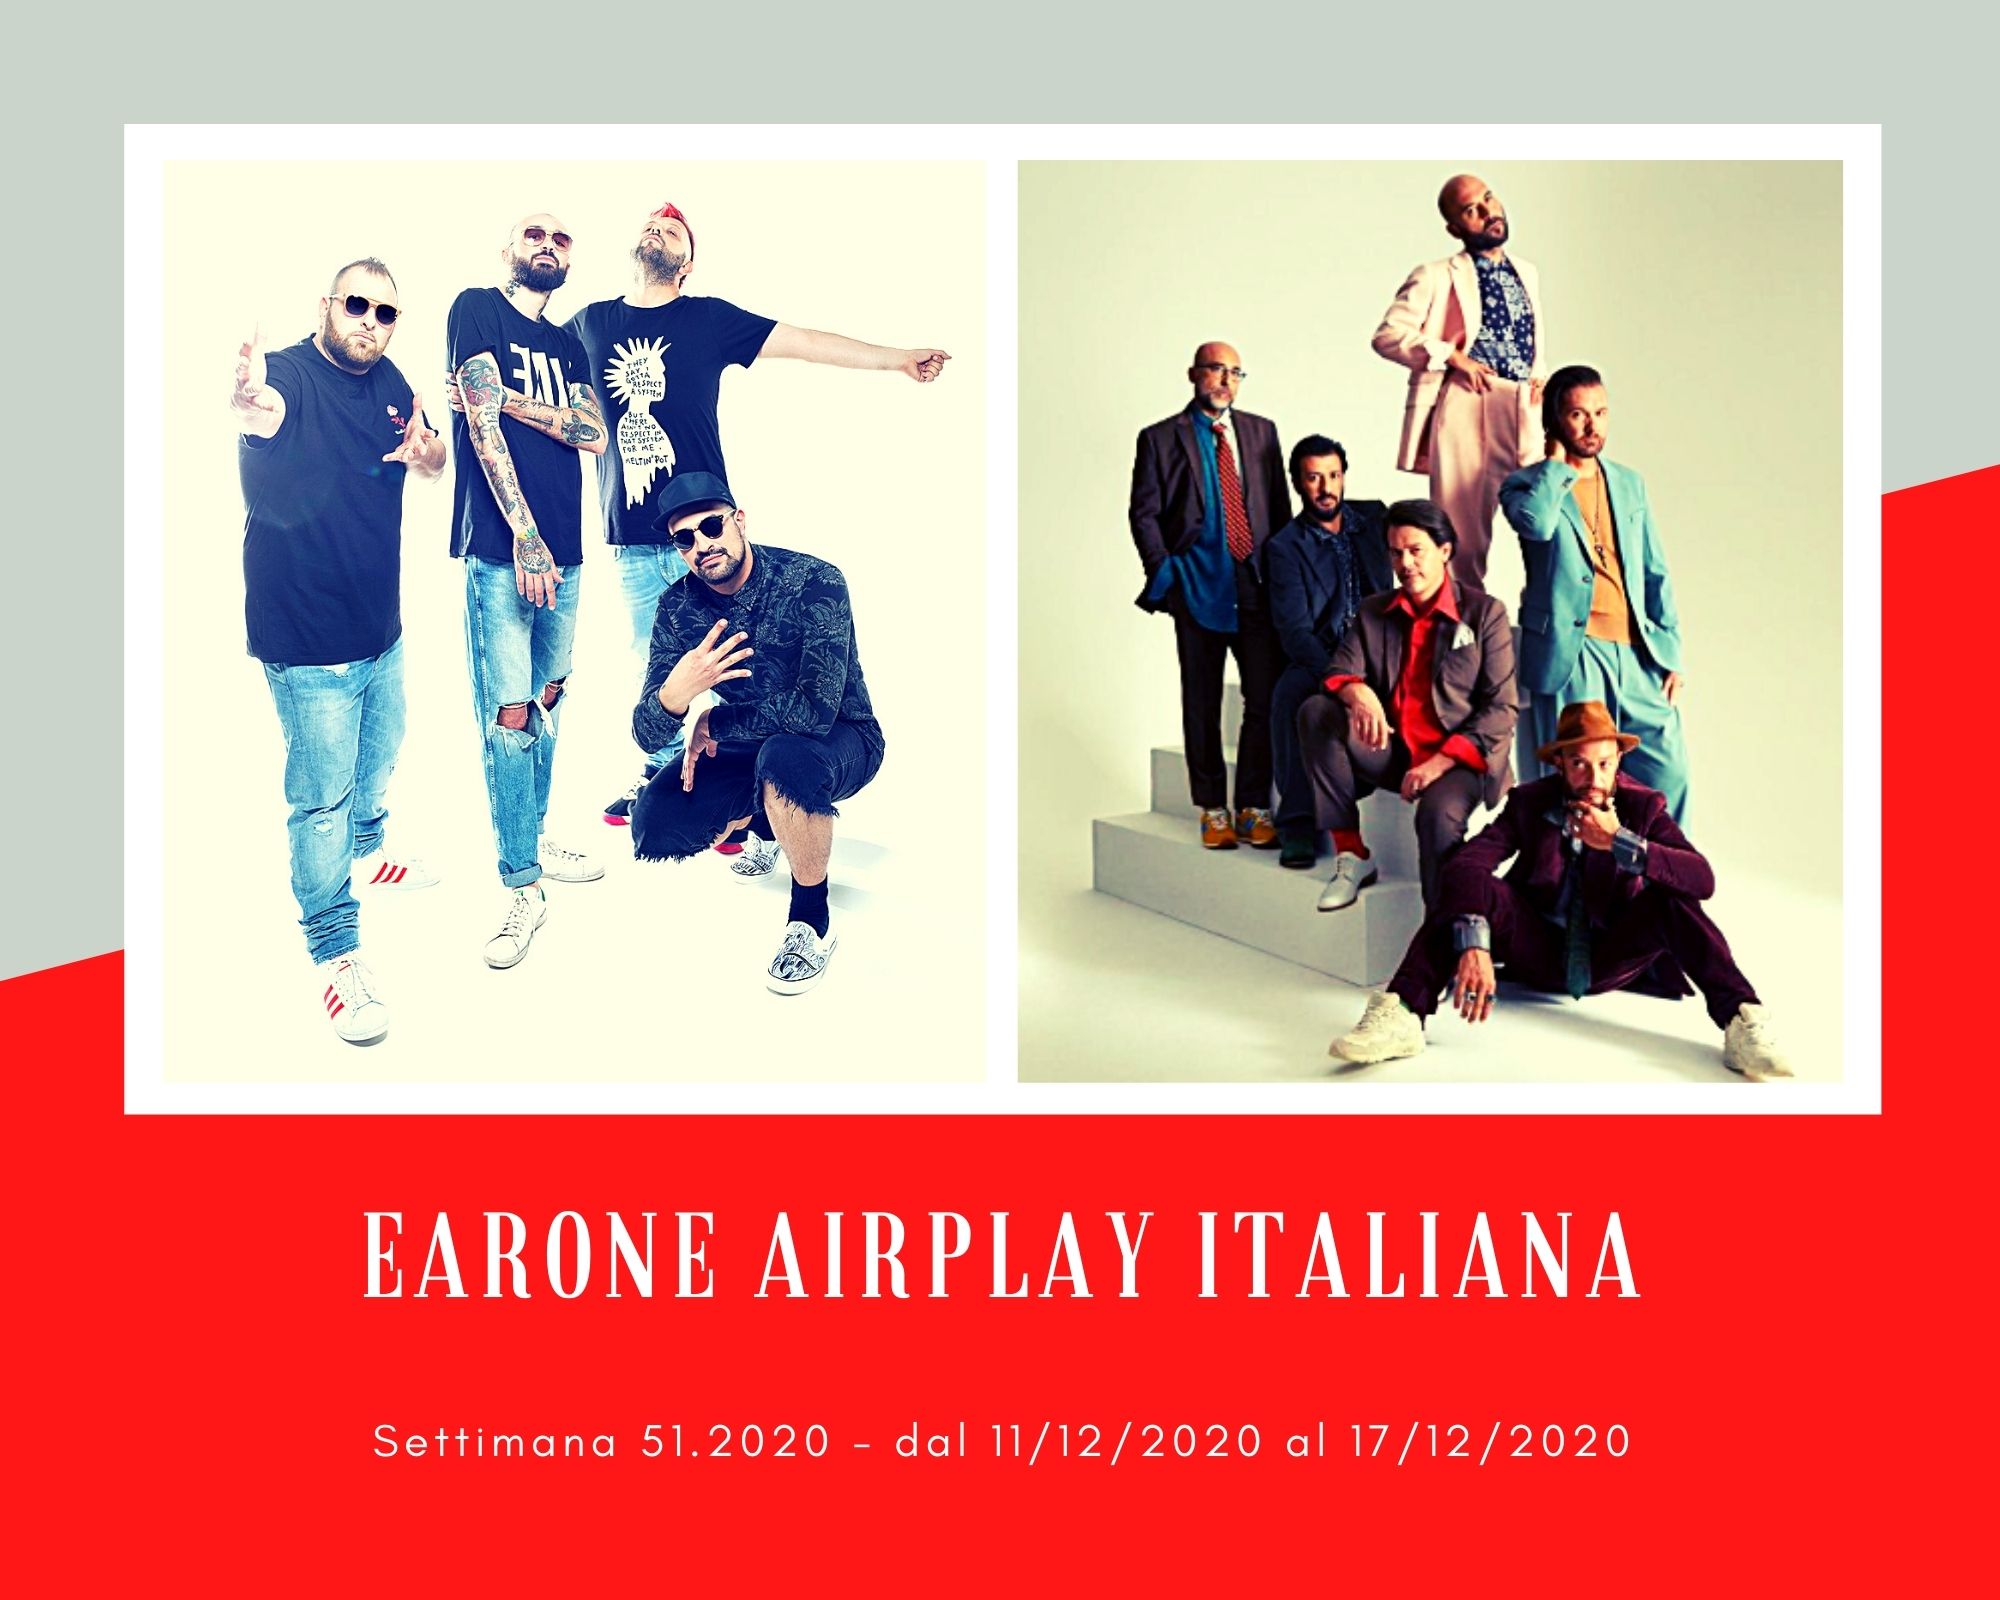 Classifica Radio EARONE Airplay Italiana, week 51. Natale in Salento con i Boomdabash e i Negramaro